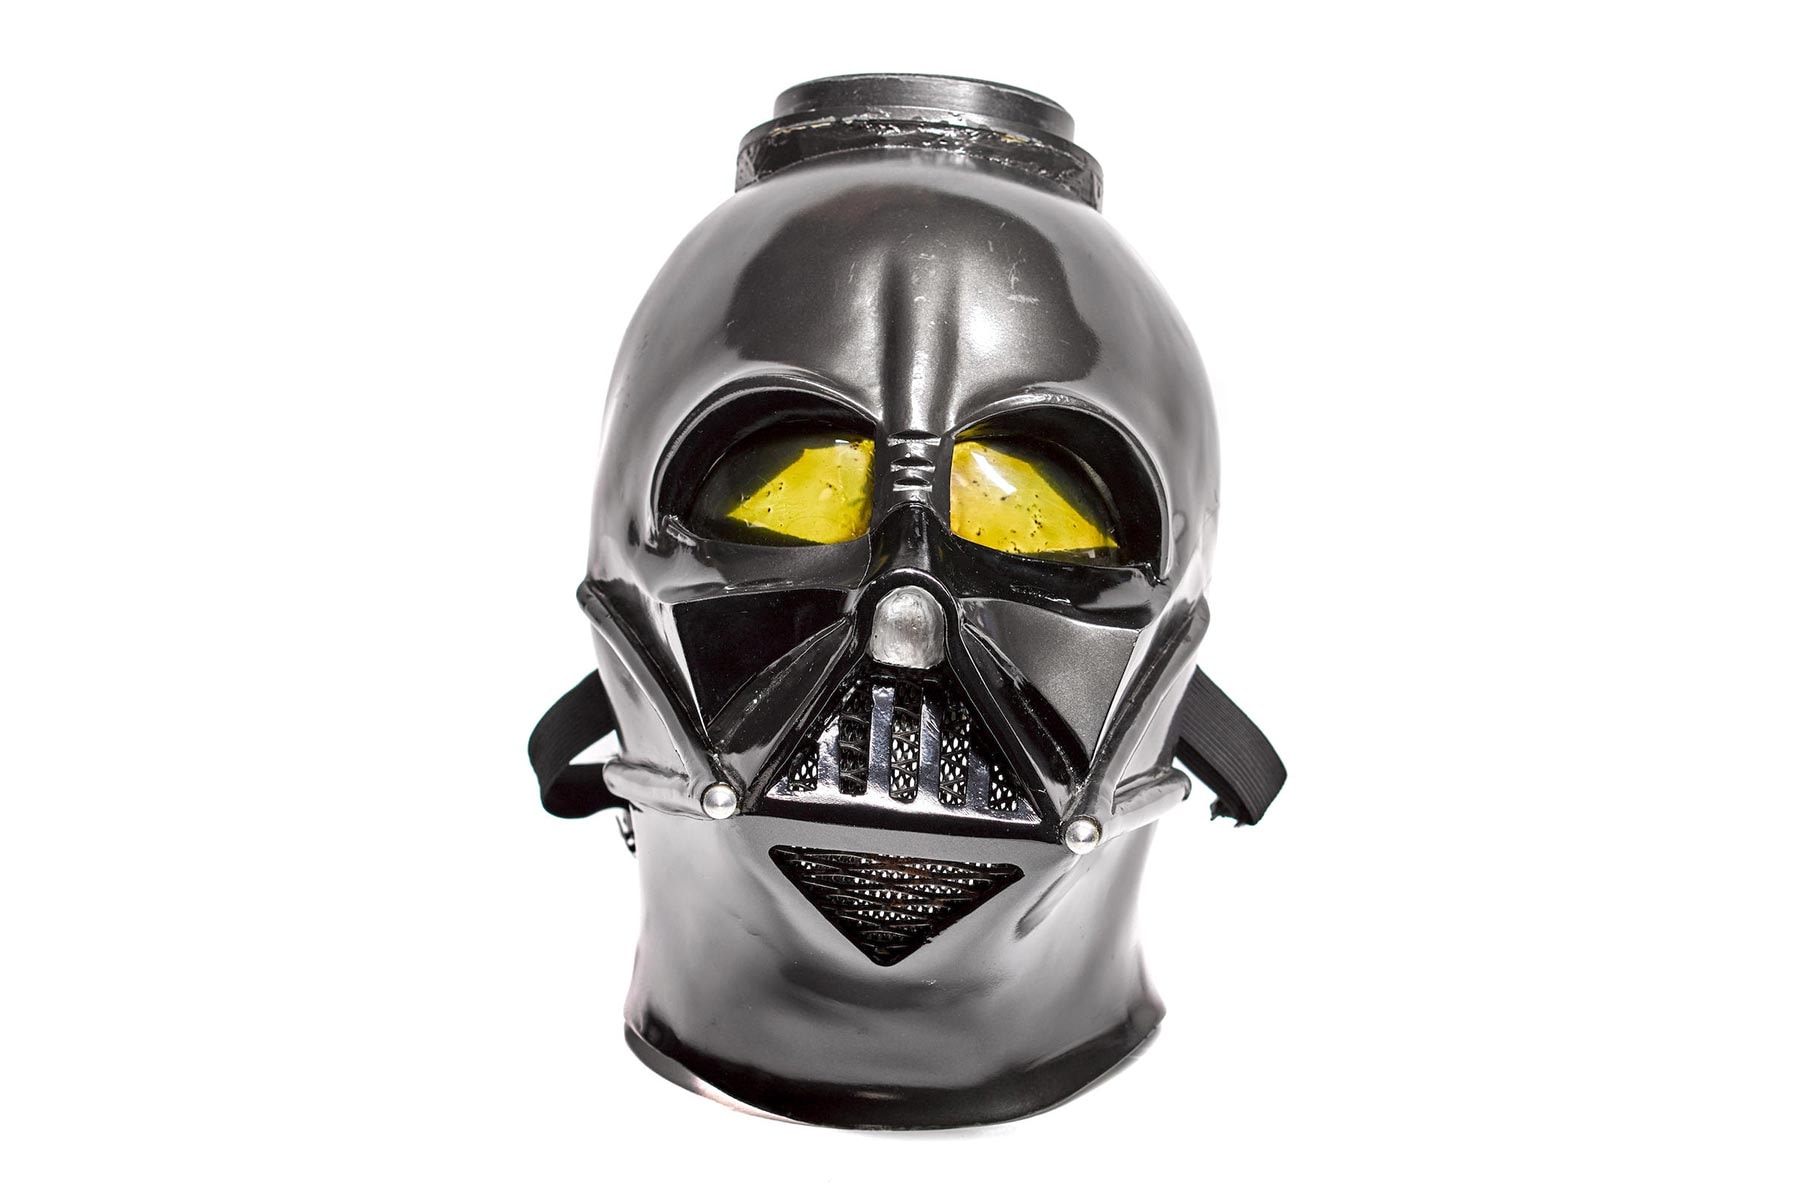 Darth Vader Costume Auctioning at Bonhams 